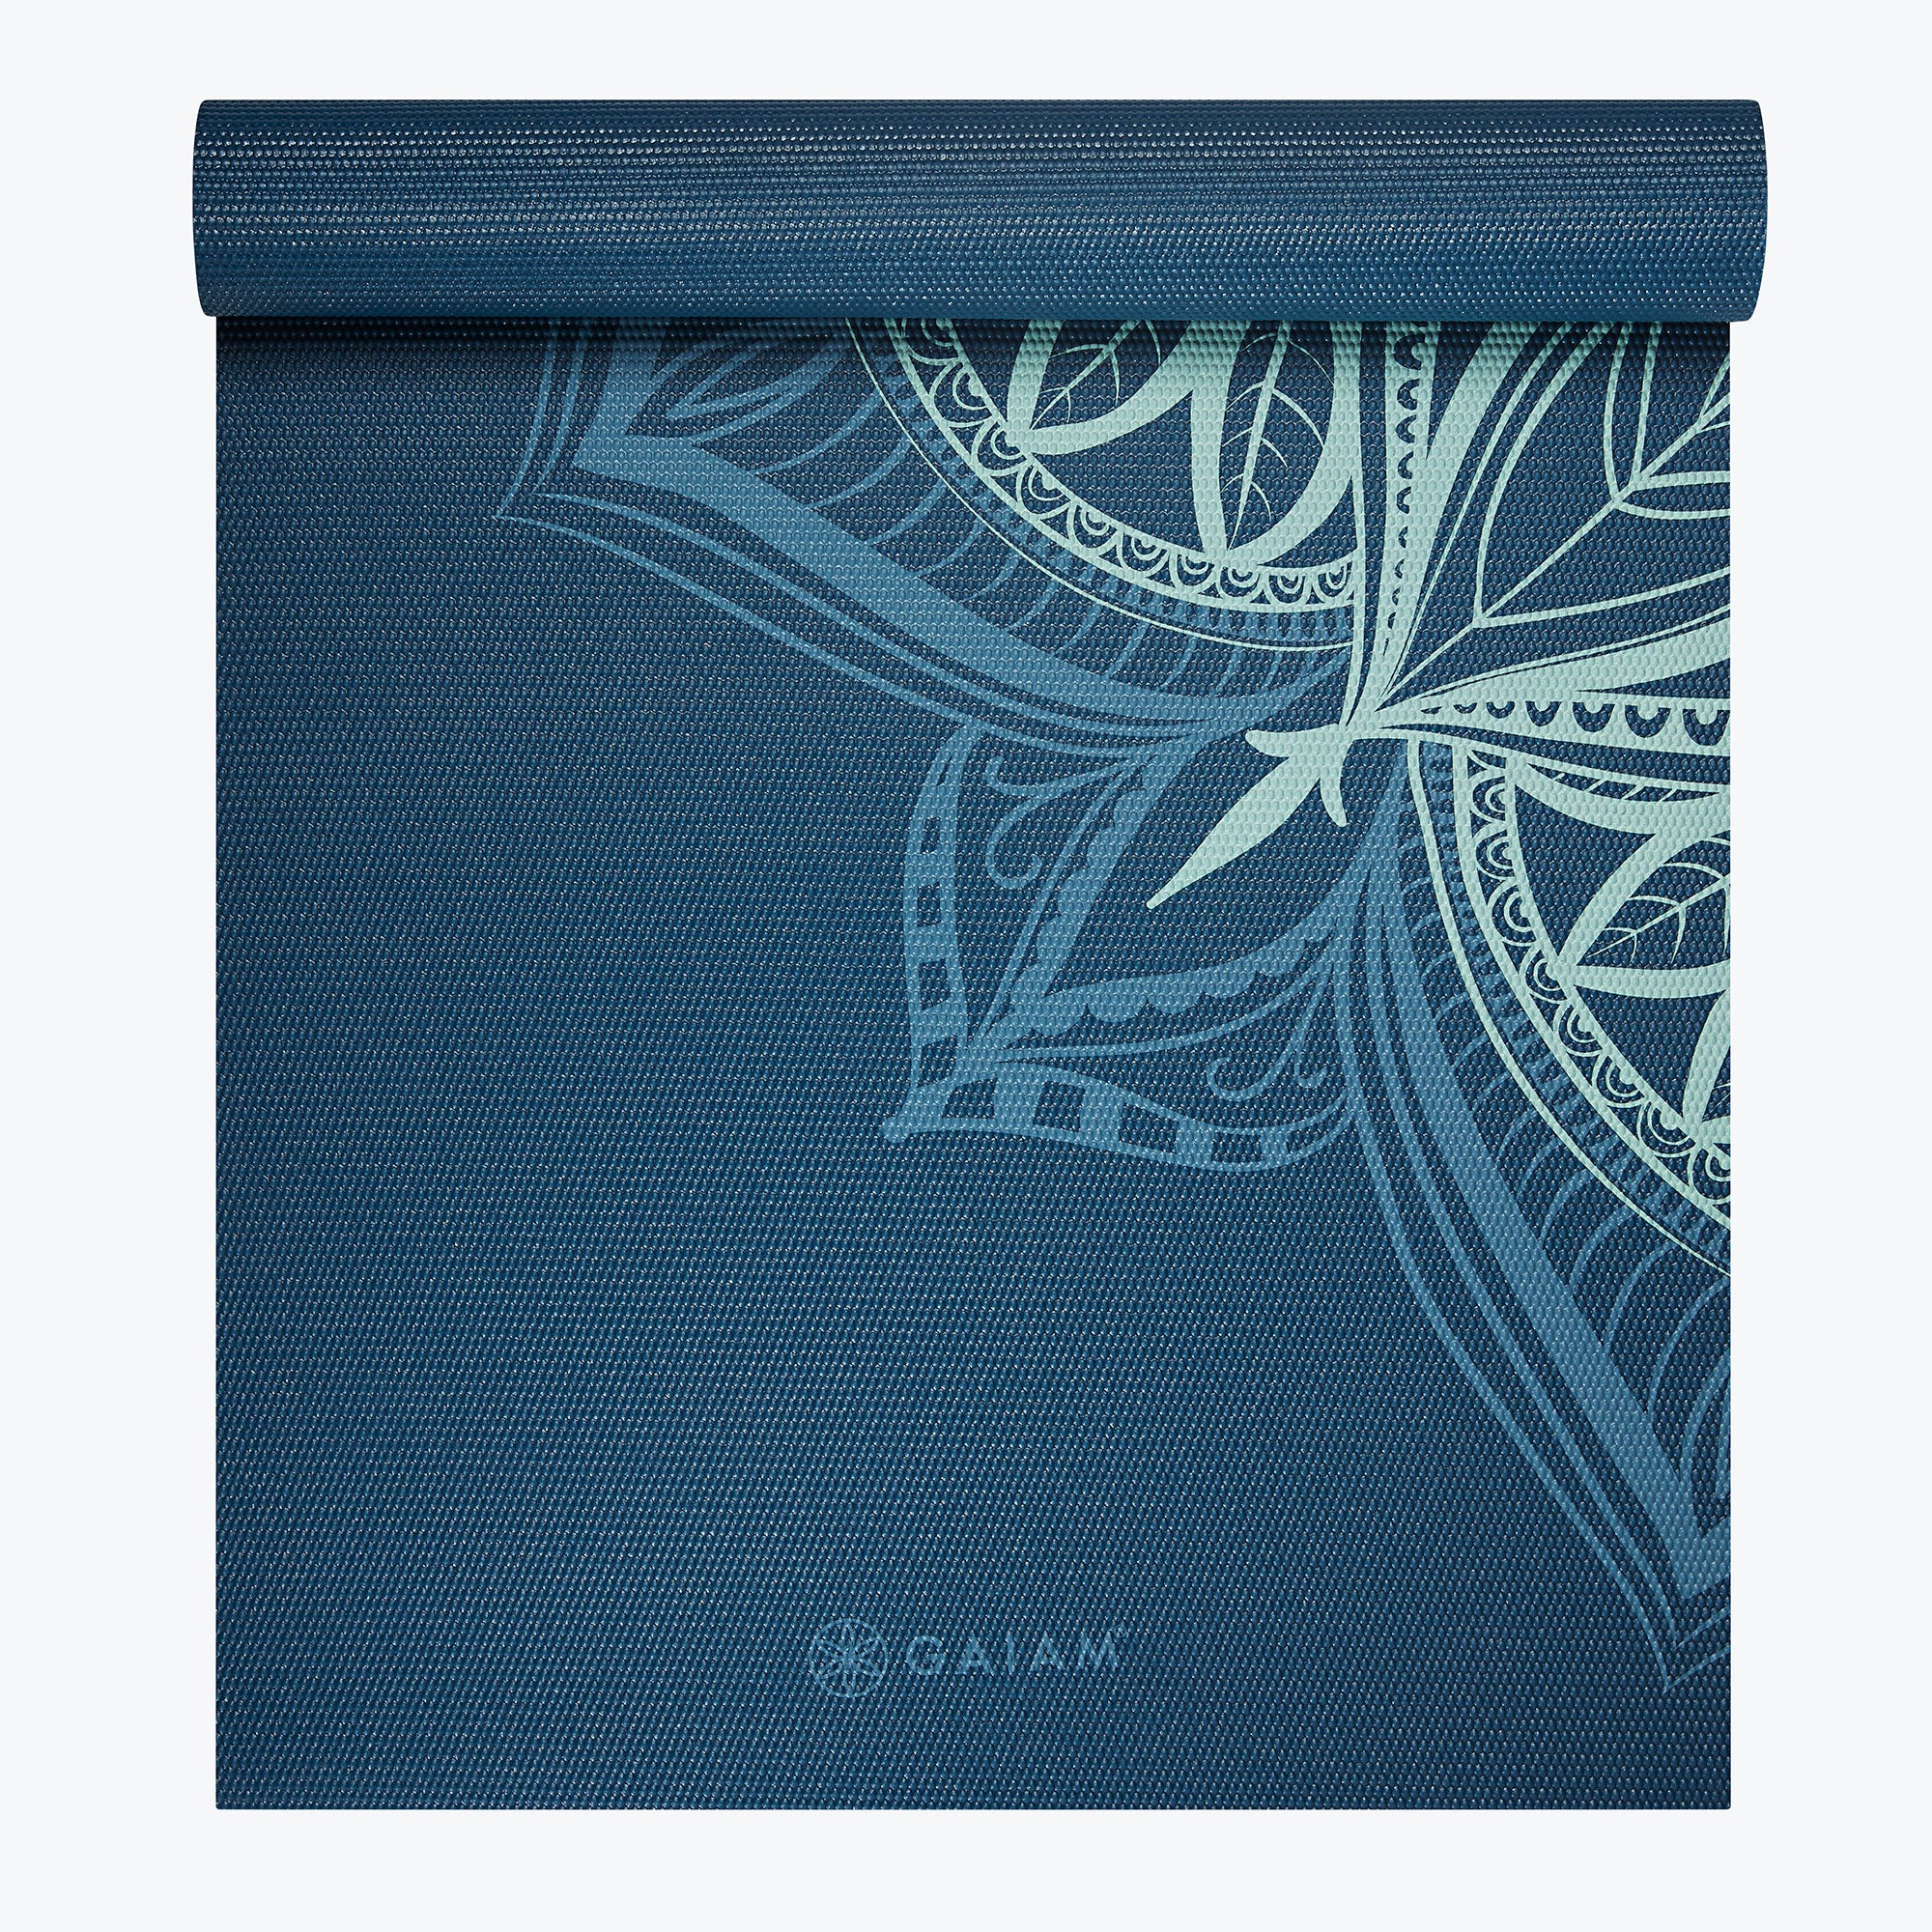 Gaiam Premium Print Yoga Mat 5MM Stabilizing Grip - Extra Thick 68 x 24  Gray